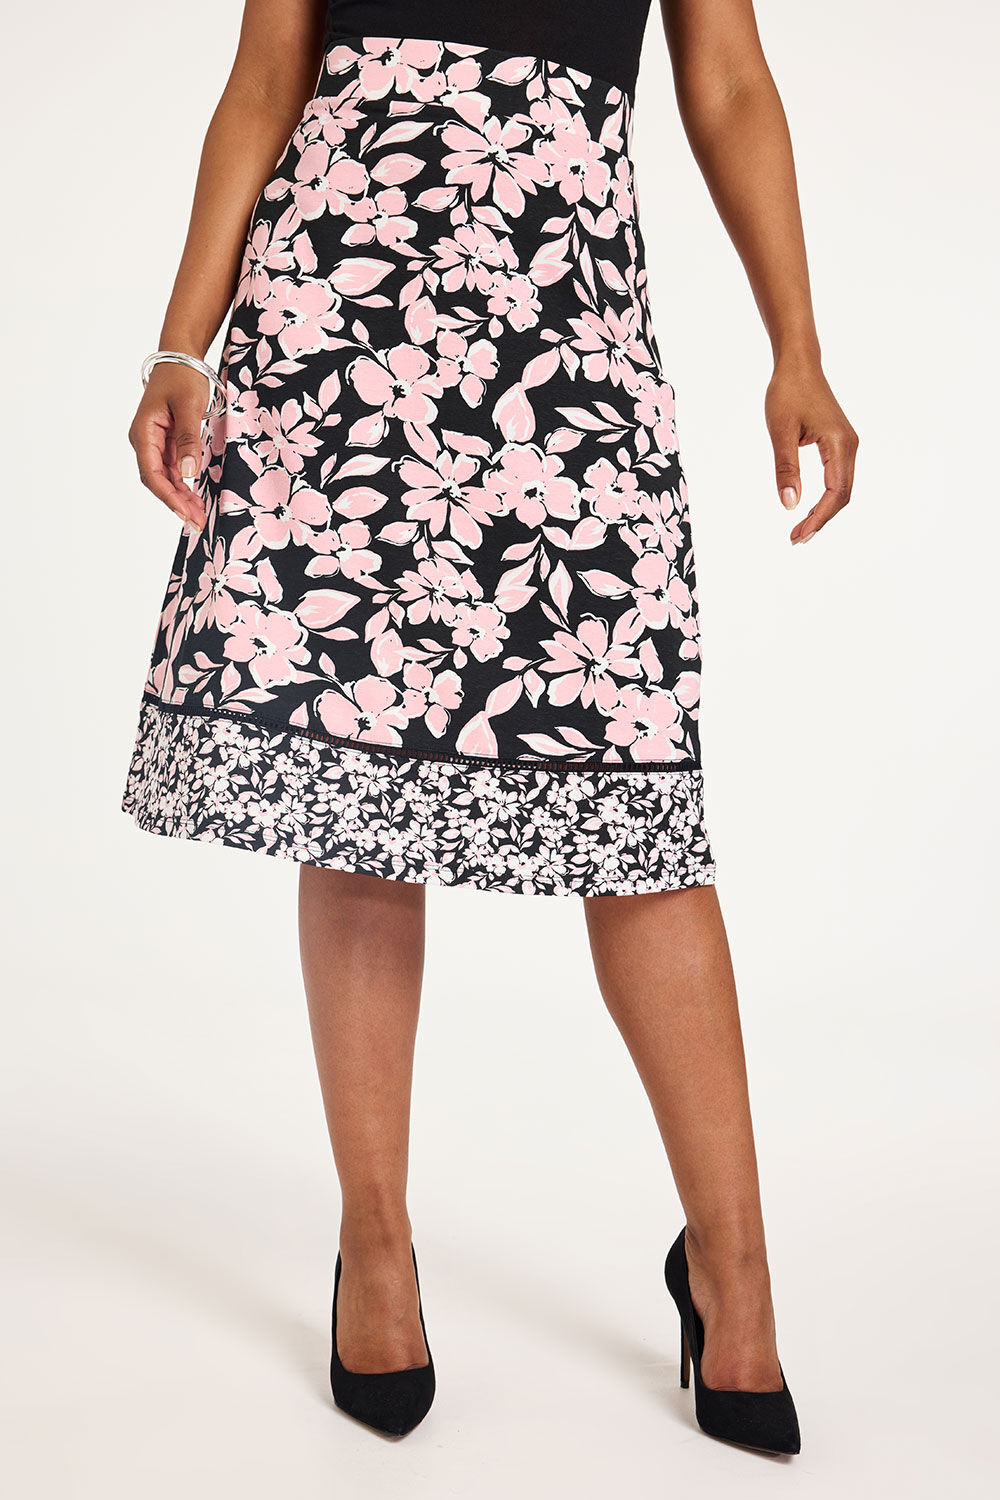 Bonmarche Black Floral Border Print A-Line Jersey Skirt, Size: 26